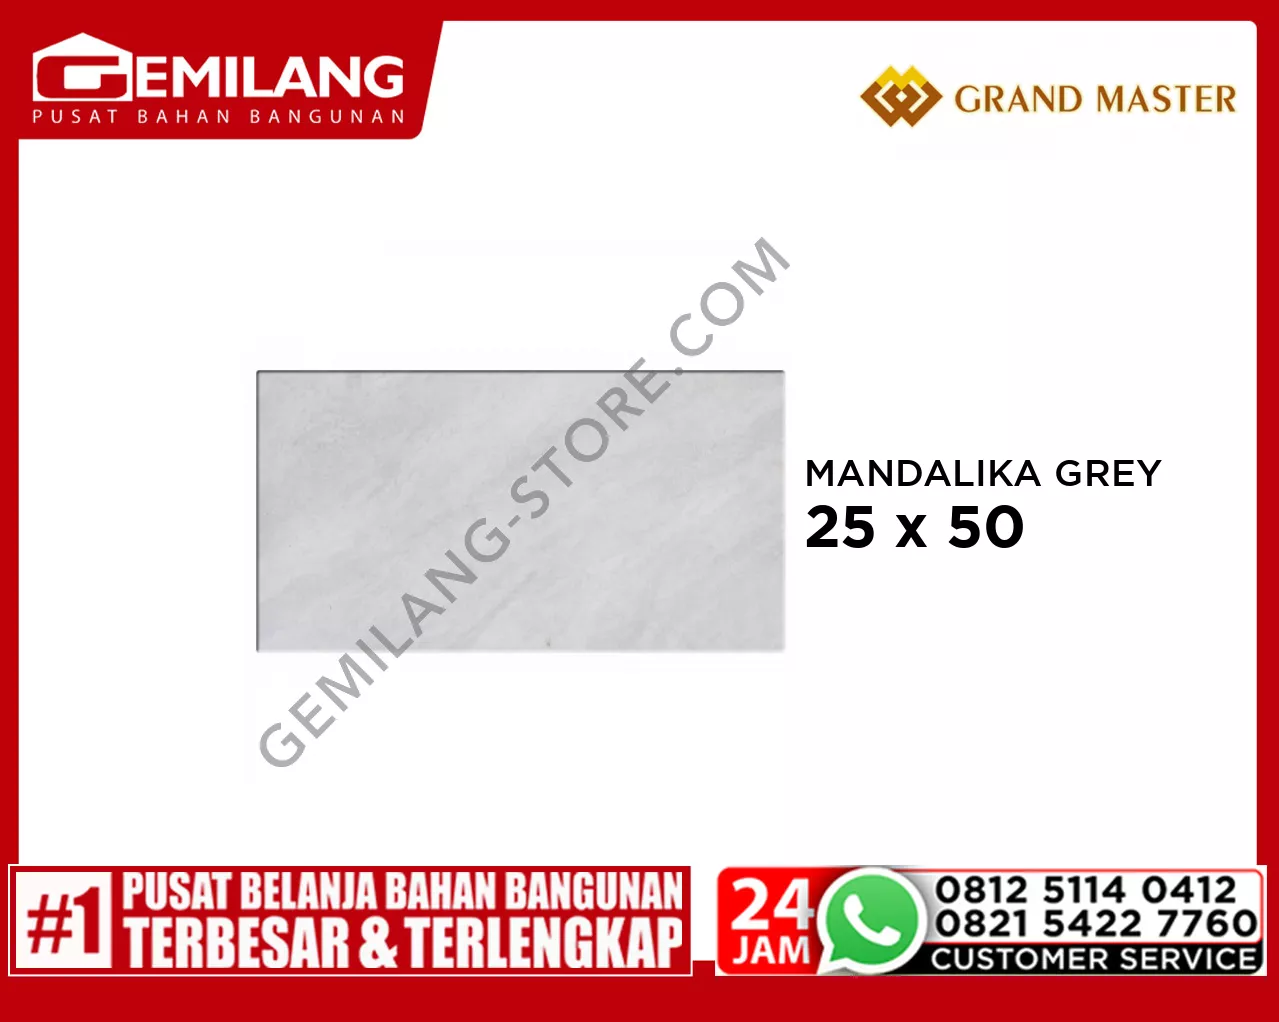 GRAND MASTER MANDALIKA GREY 25 x 50